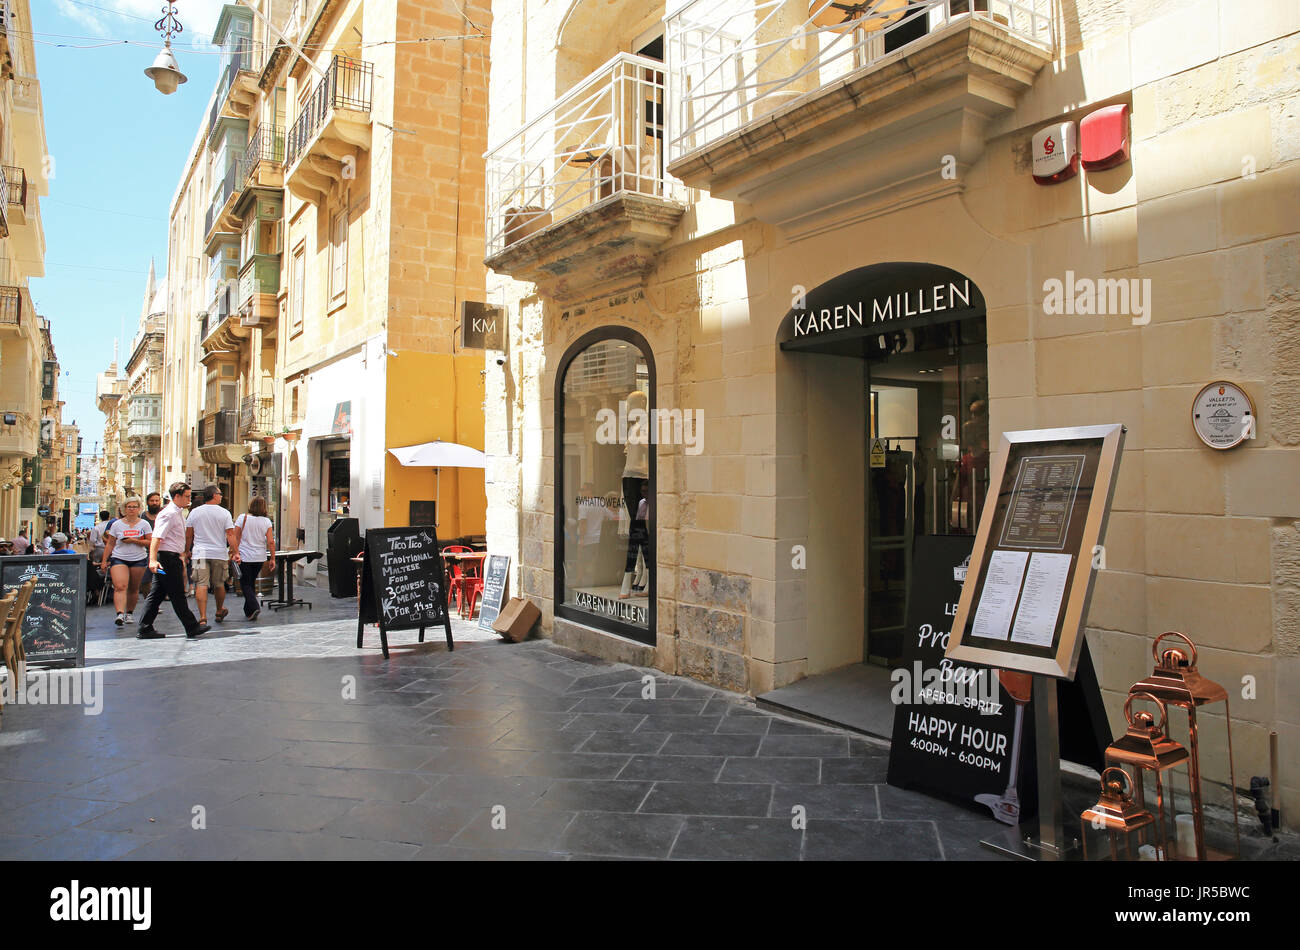 Smart Karen Millen clothes shop on Old Theatre Street, in Valletta, capital of Malta Stock Photo